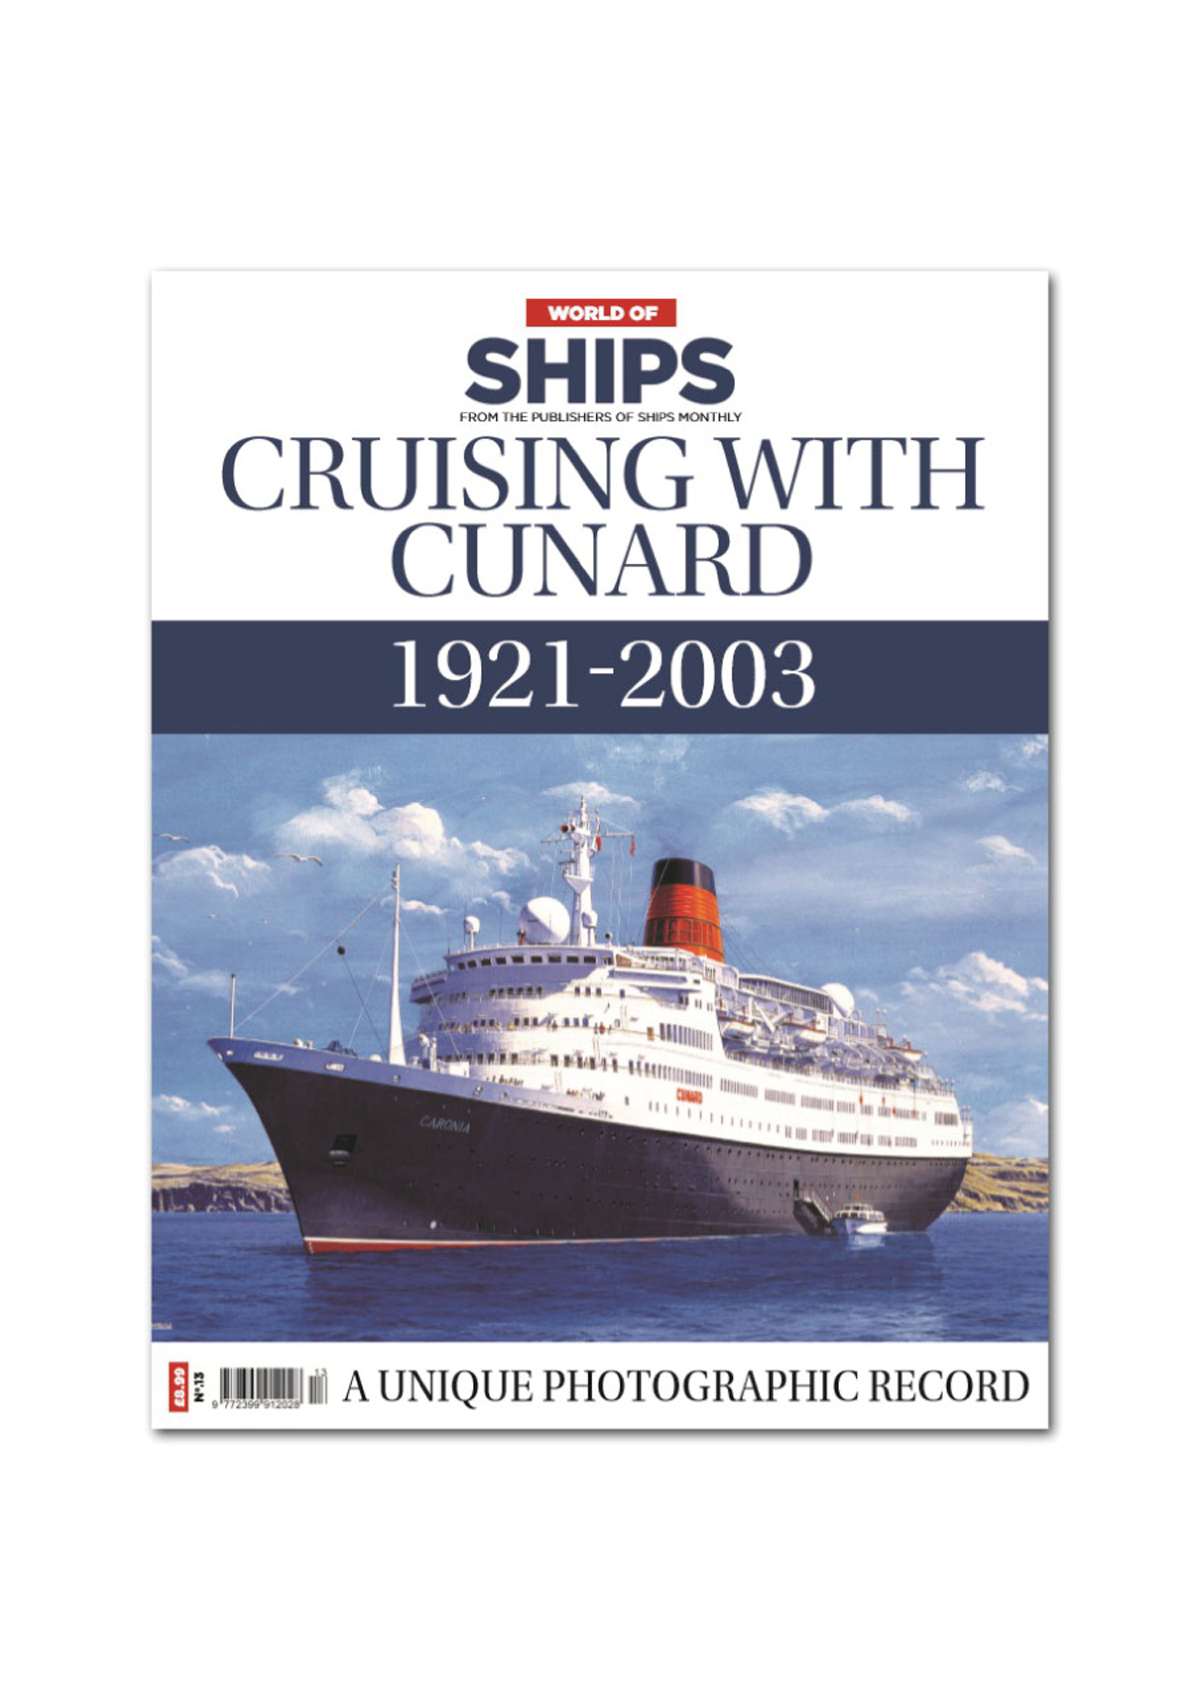 2028 - World of Ships #13 - Cruising with Cunard 1921-2003
